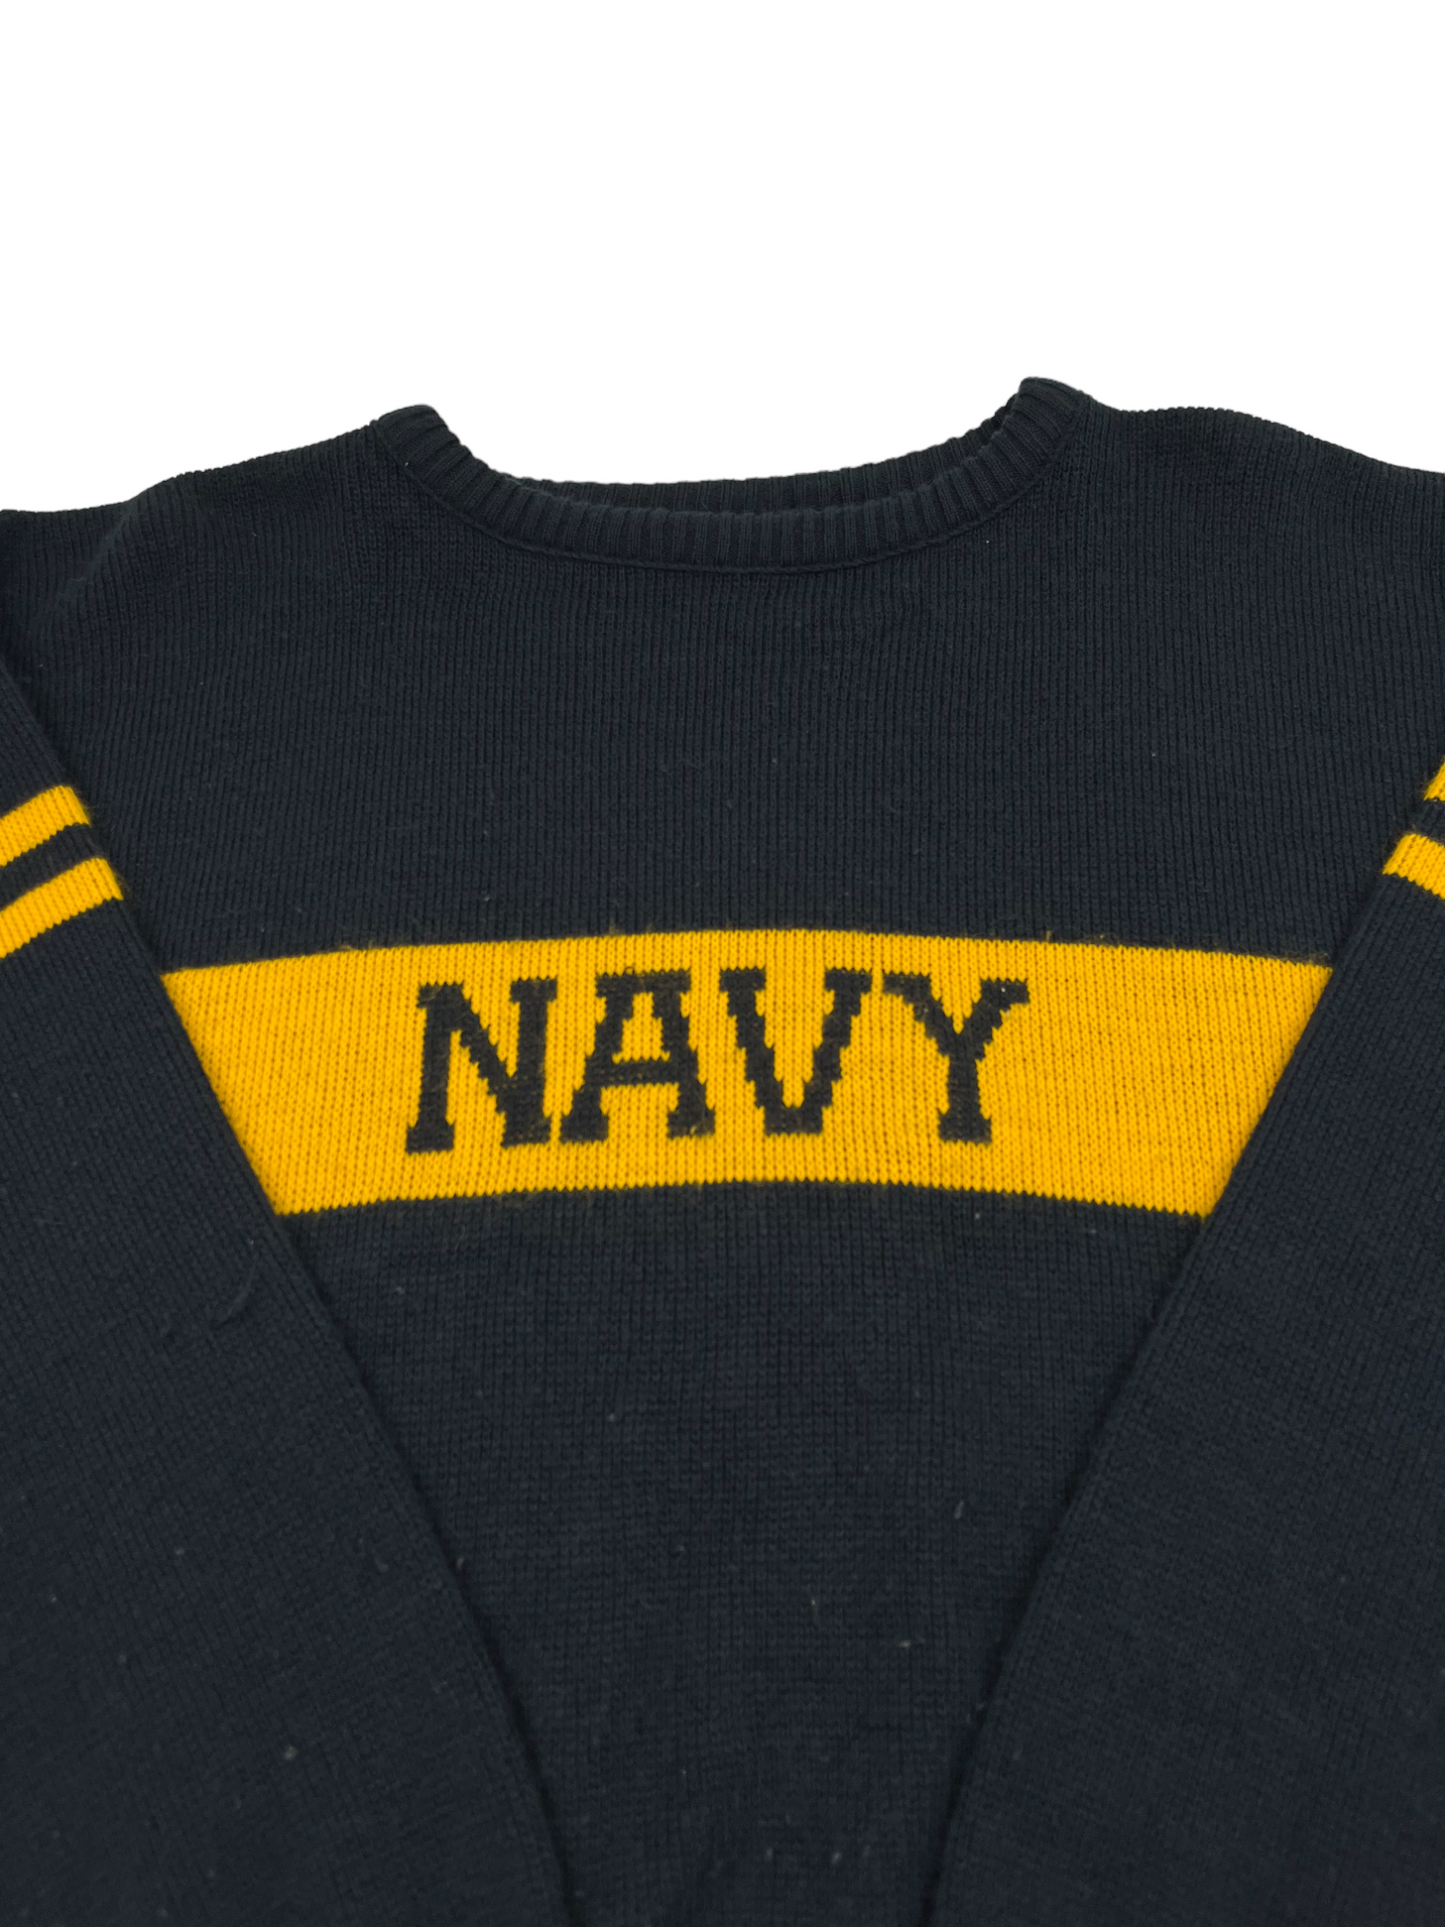 Navy Knit Sweater